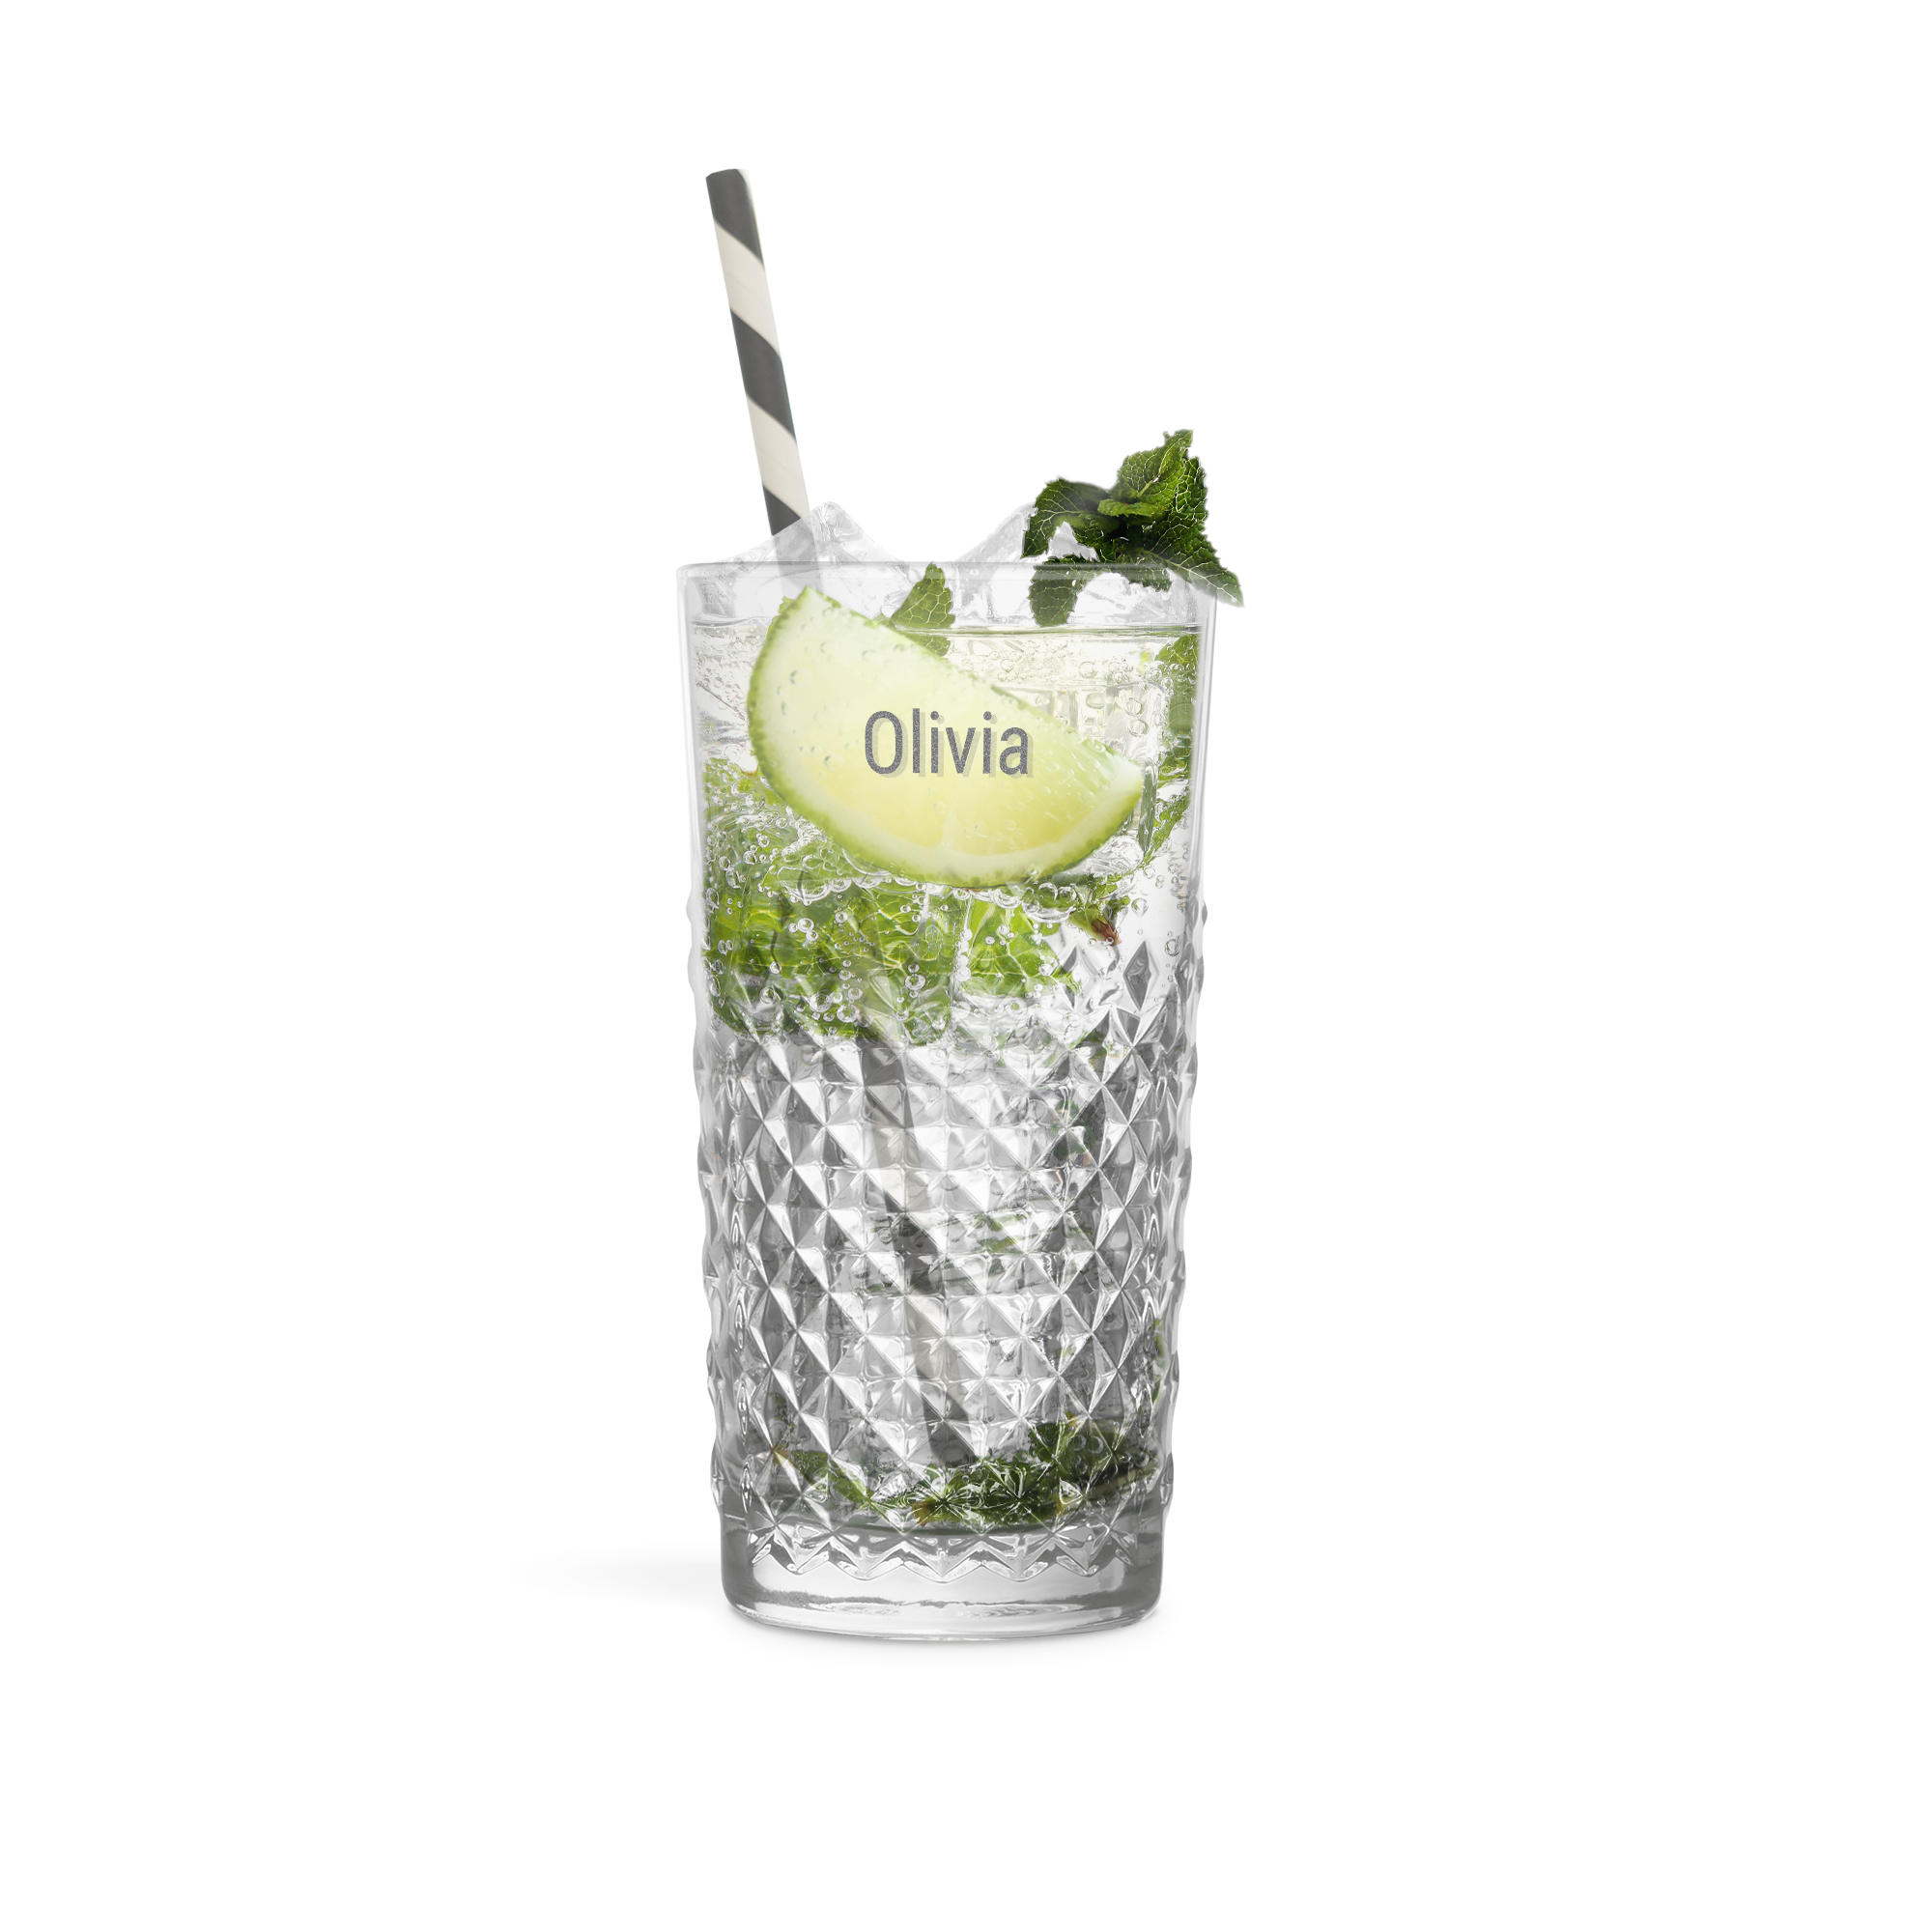 Engraved cocktail glass - Mojito - 2pcs